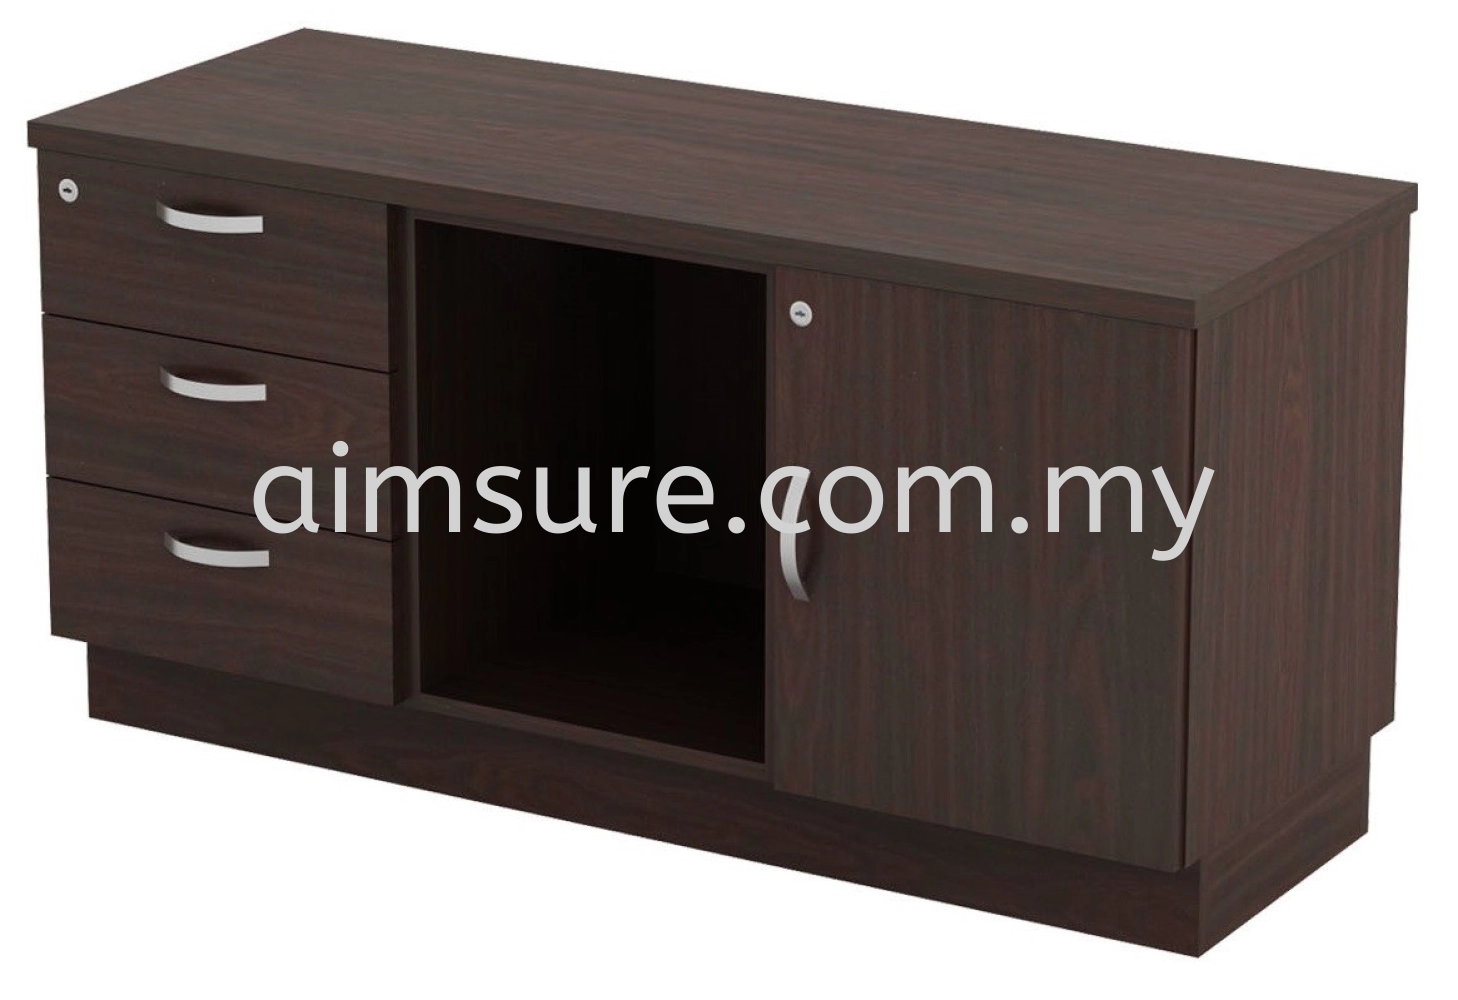 Fixed Pedestal with Open Shelf and Swinging Door Cabinet (AIM6122)